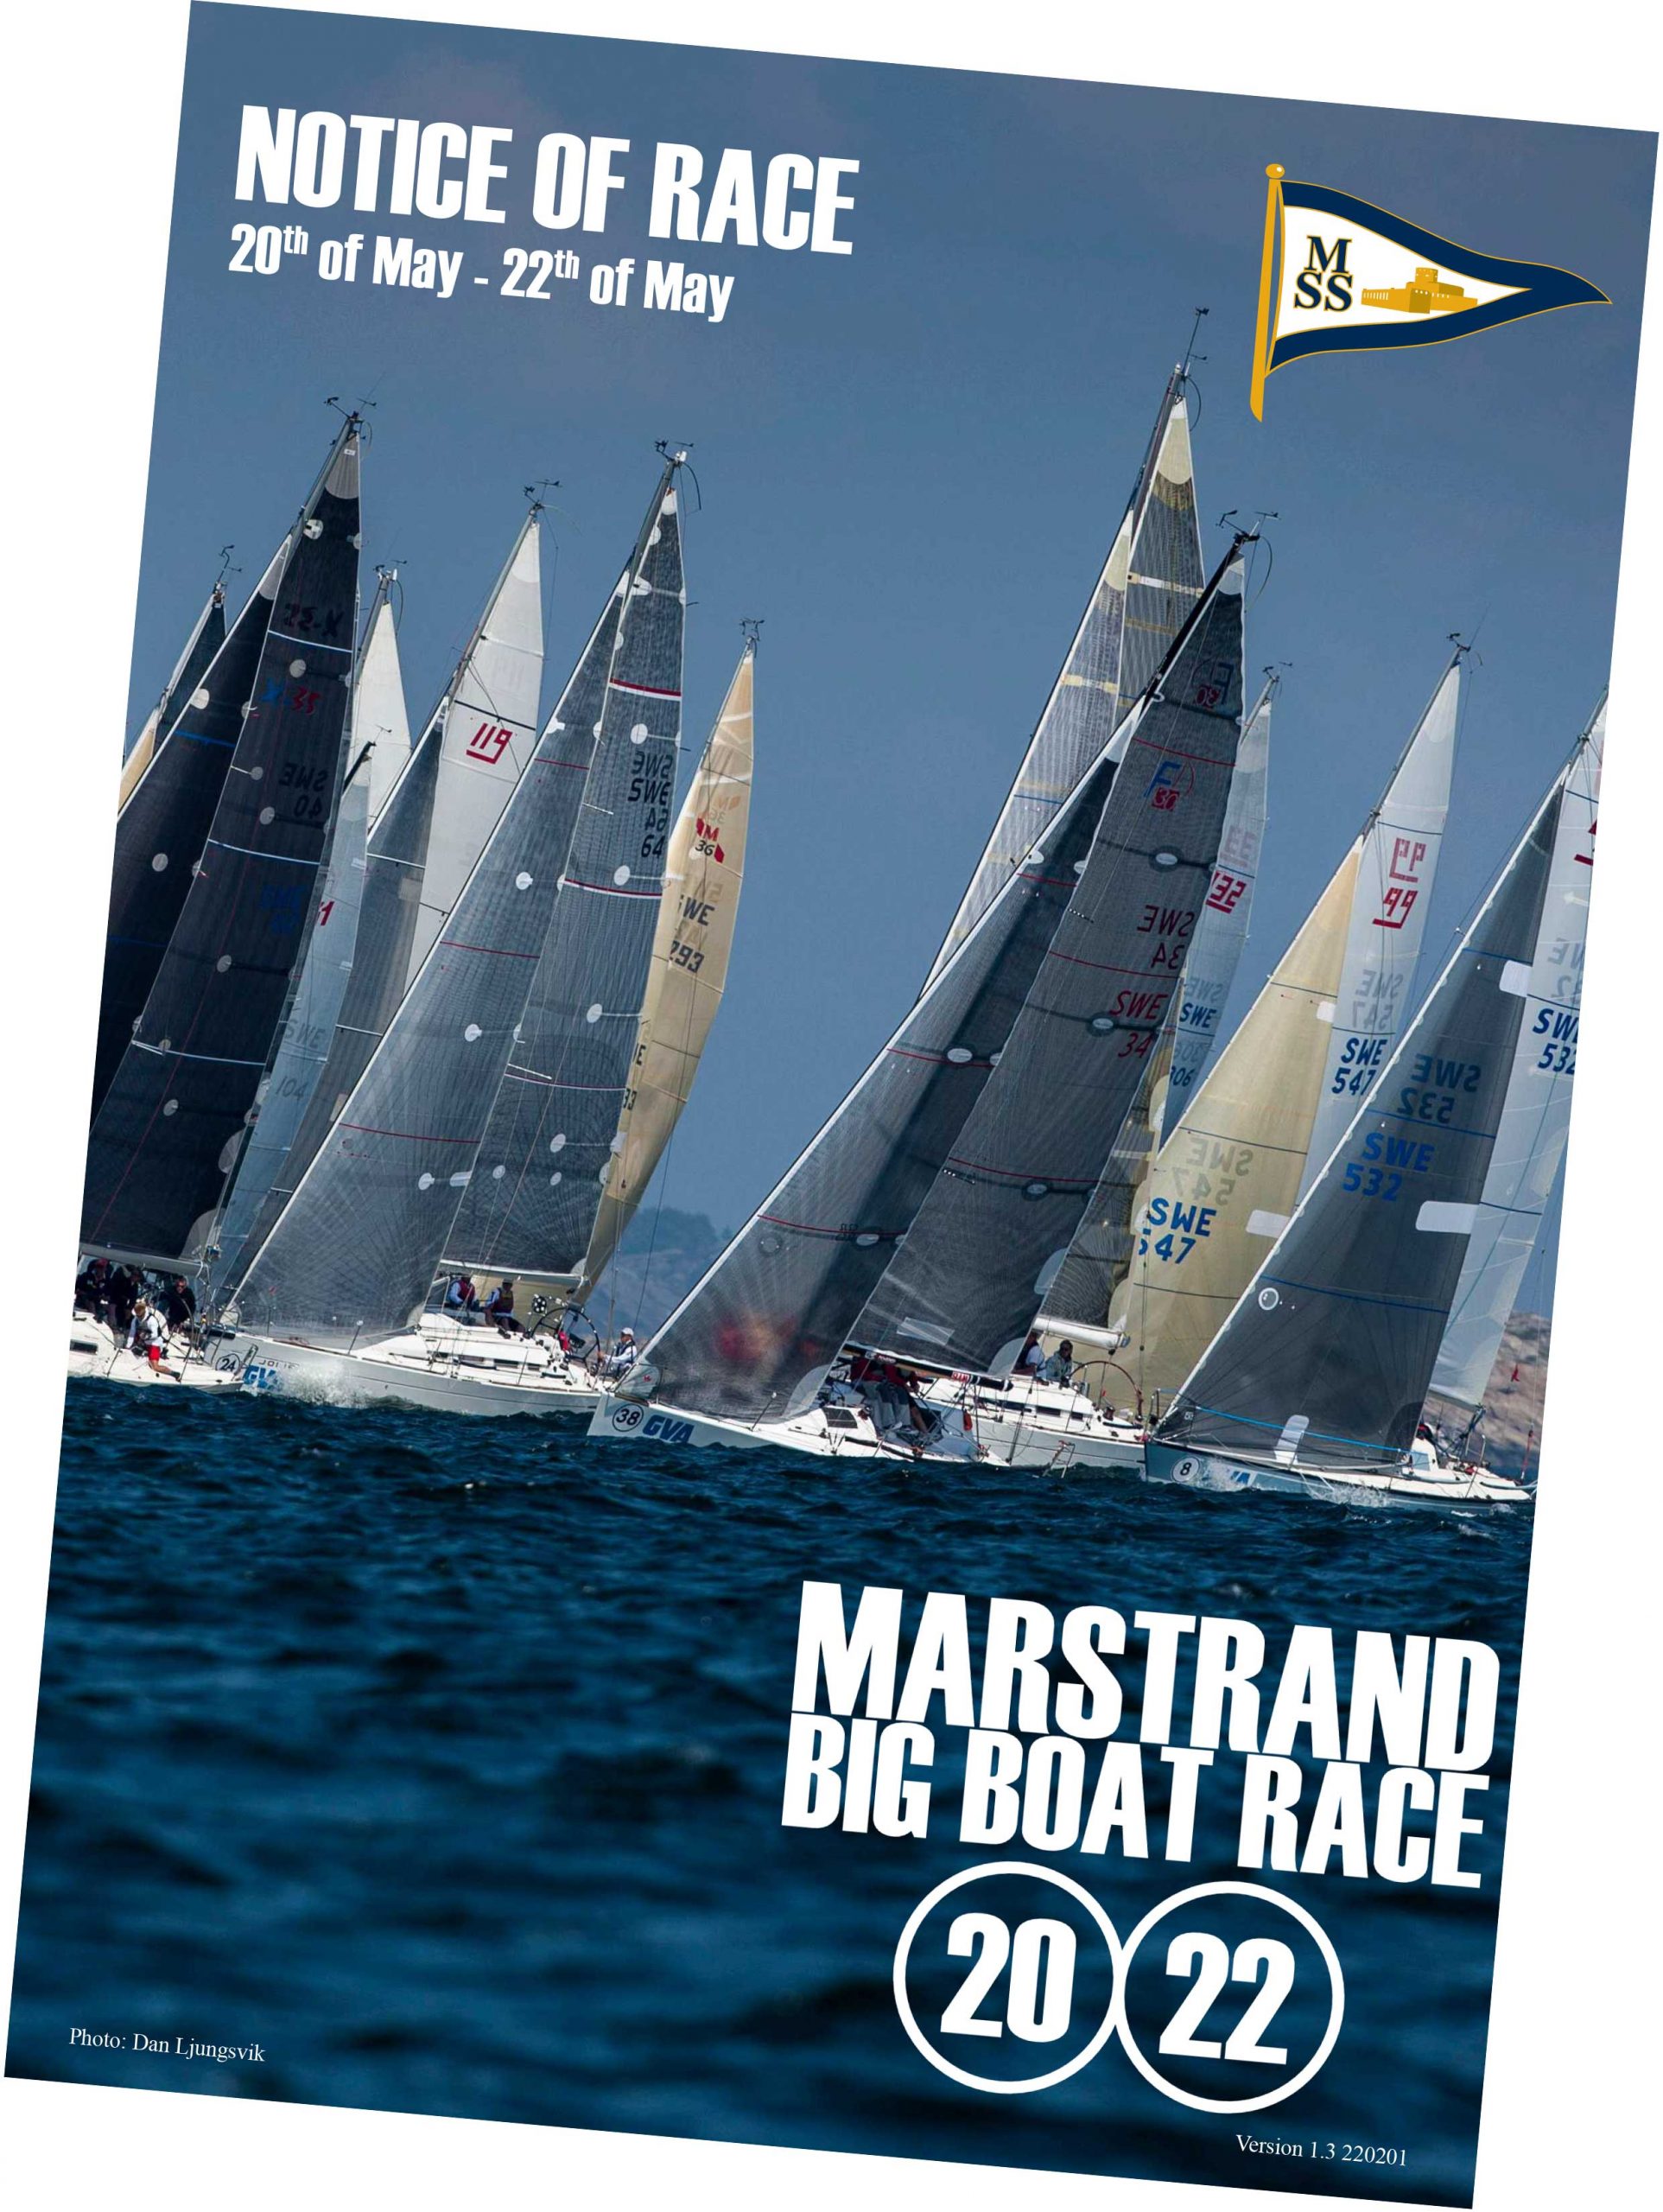 Marstrand Big Boat 2022 | anmÃ¤lan Ã¶ppen